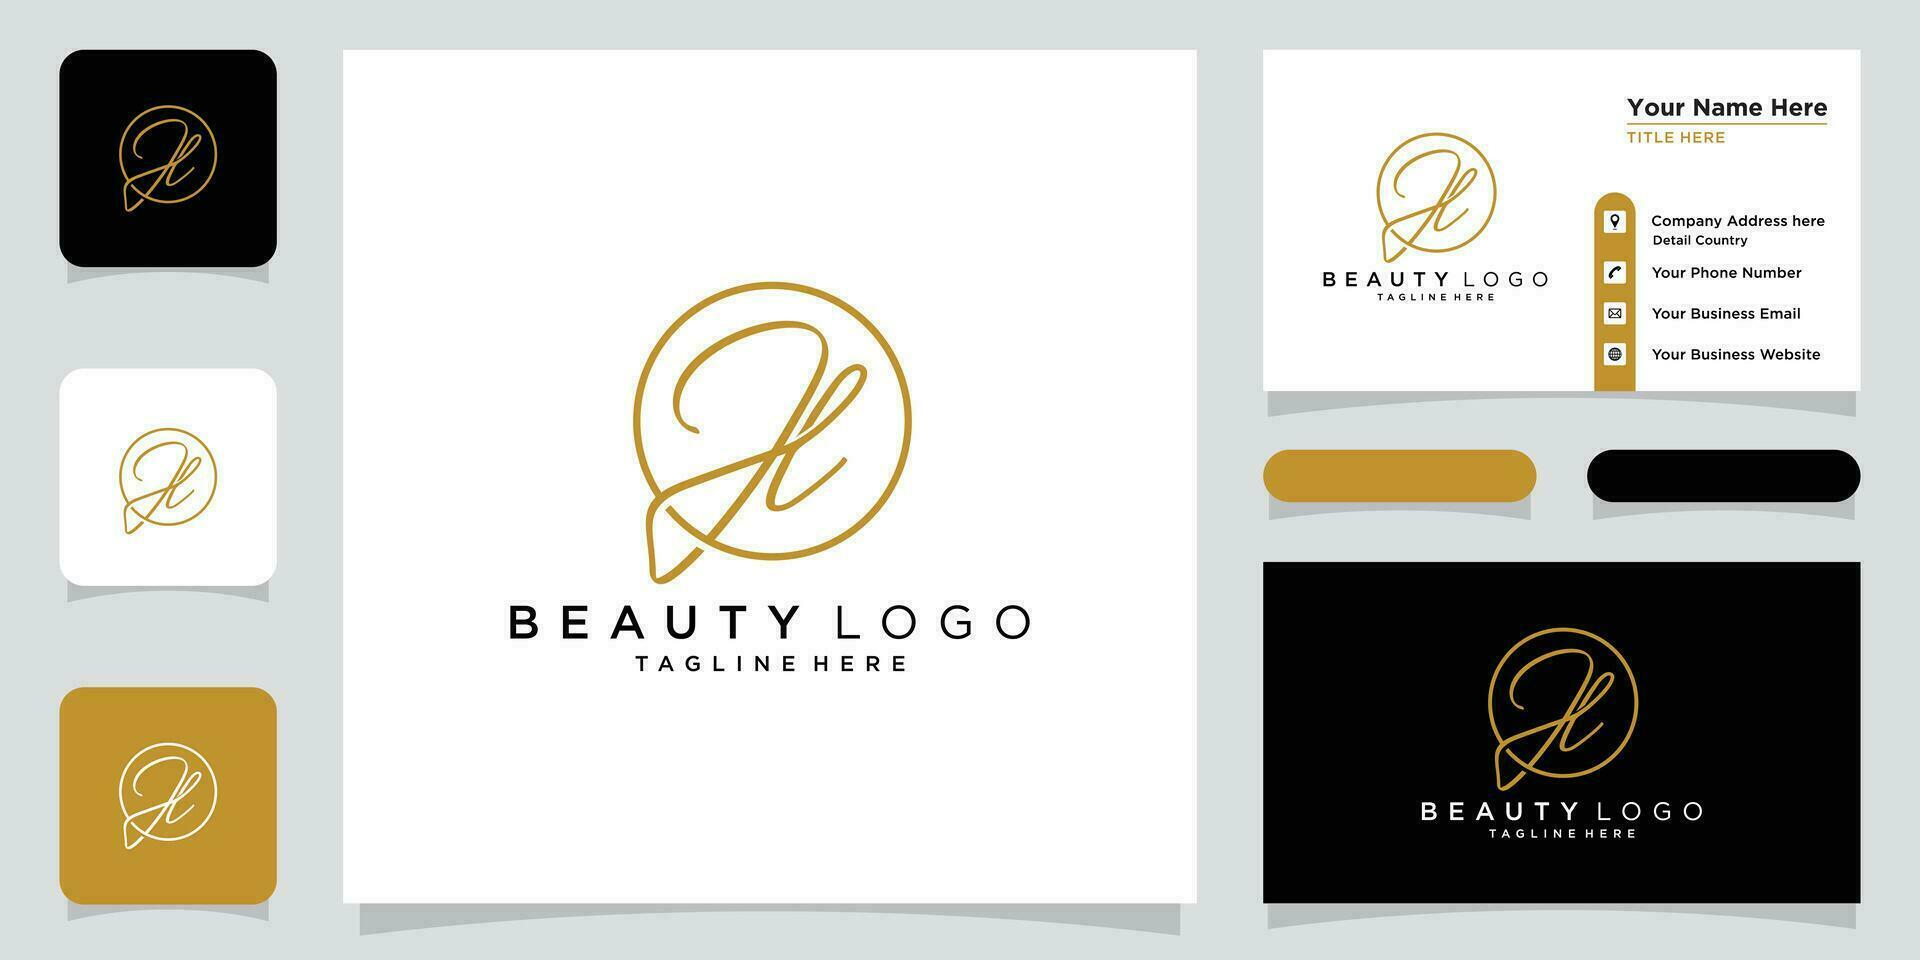 JL Initial handwriting logo vector with business card design Premium Vector